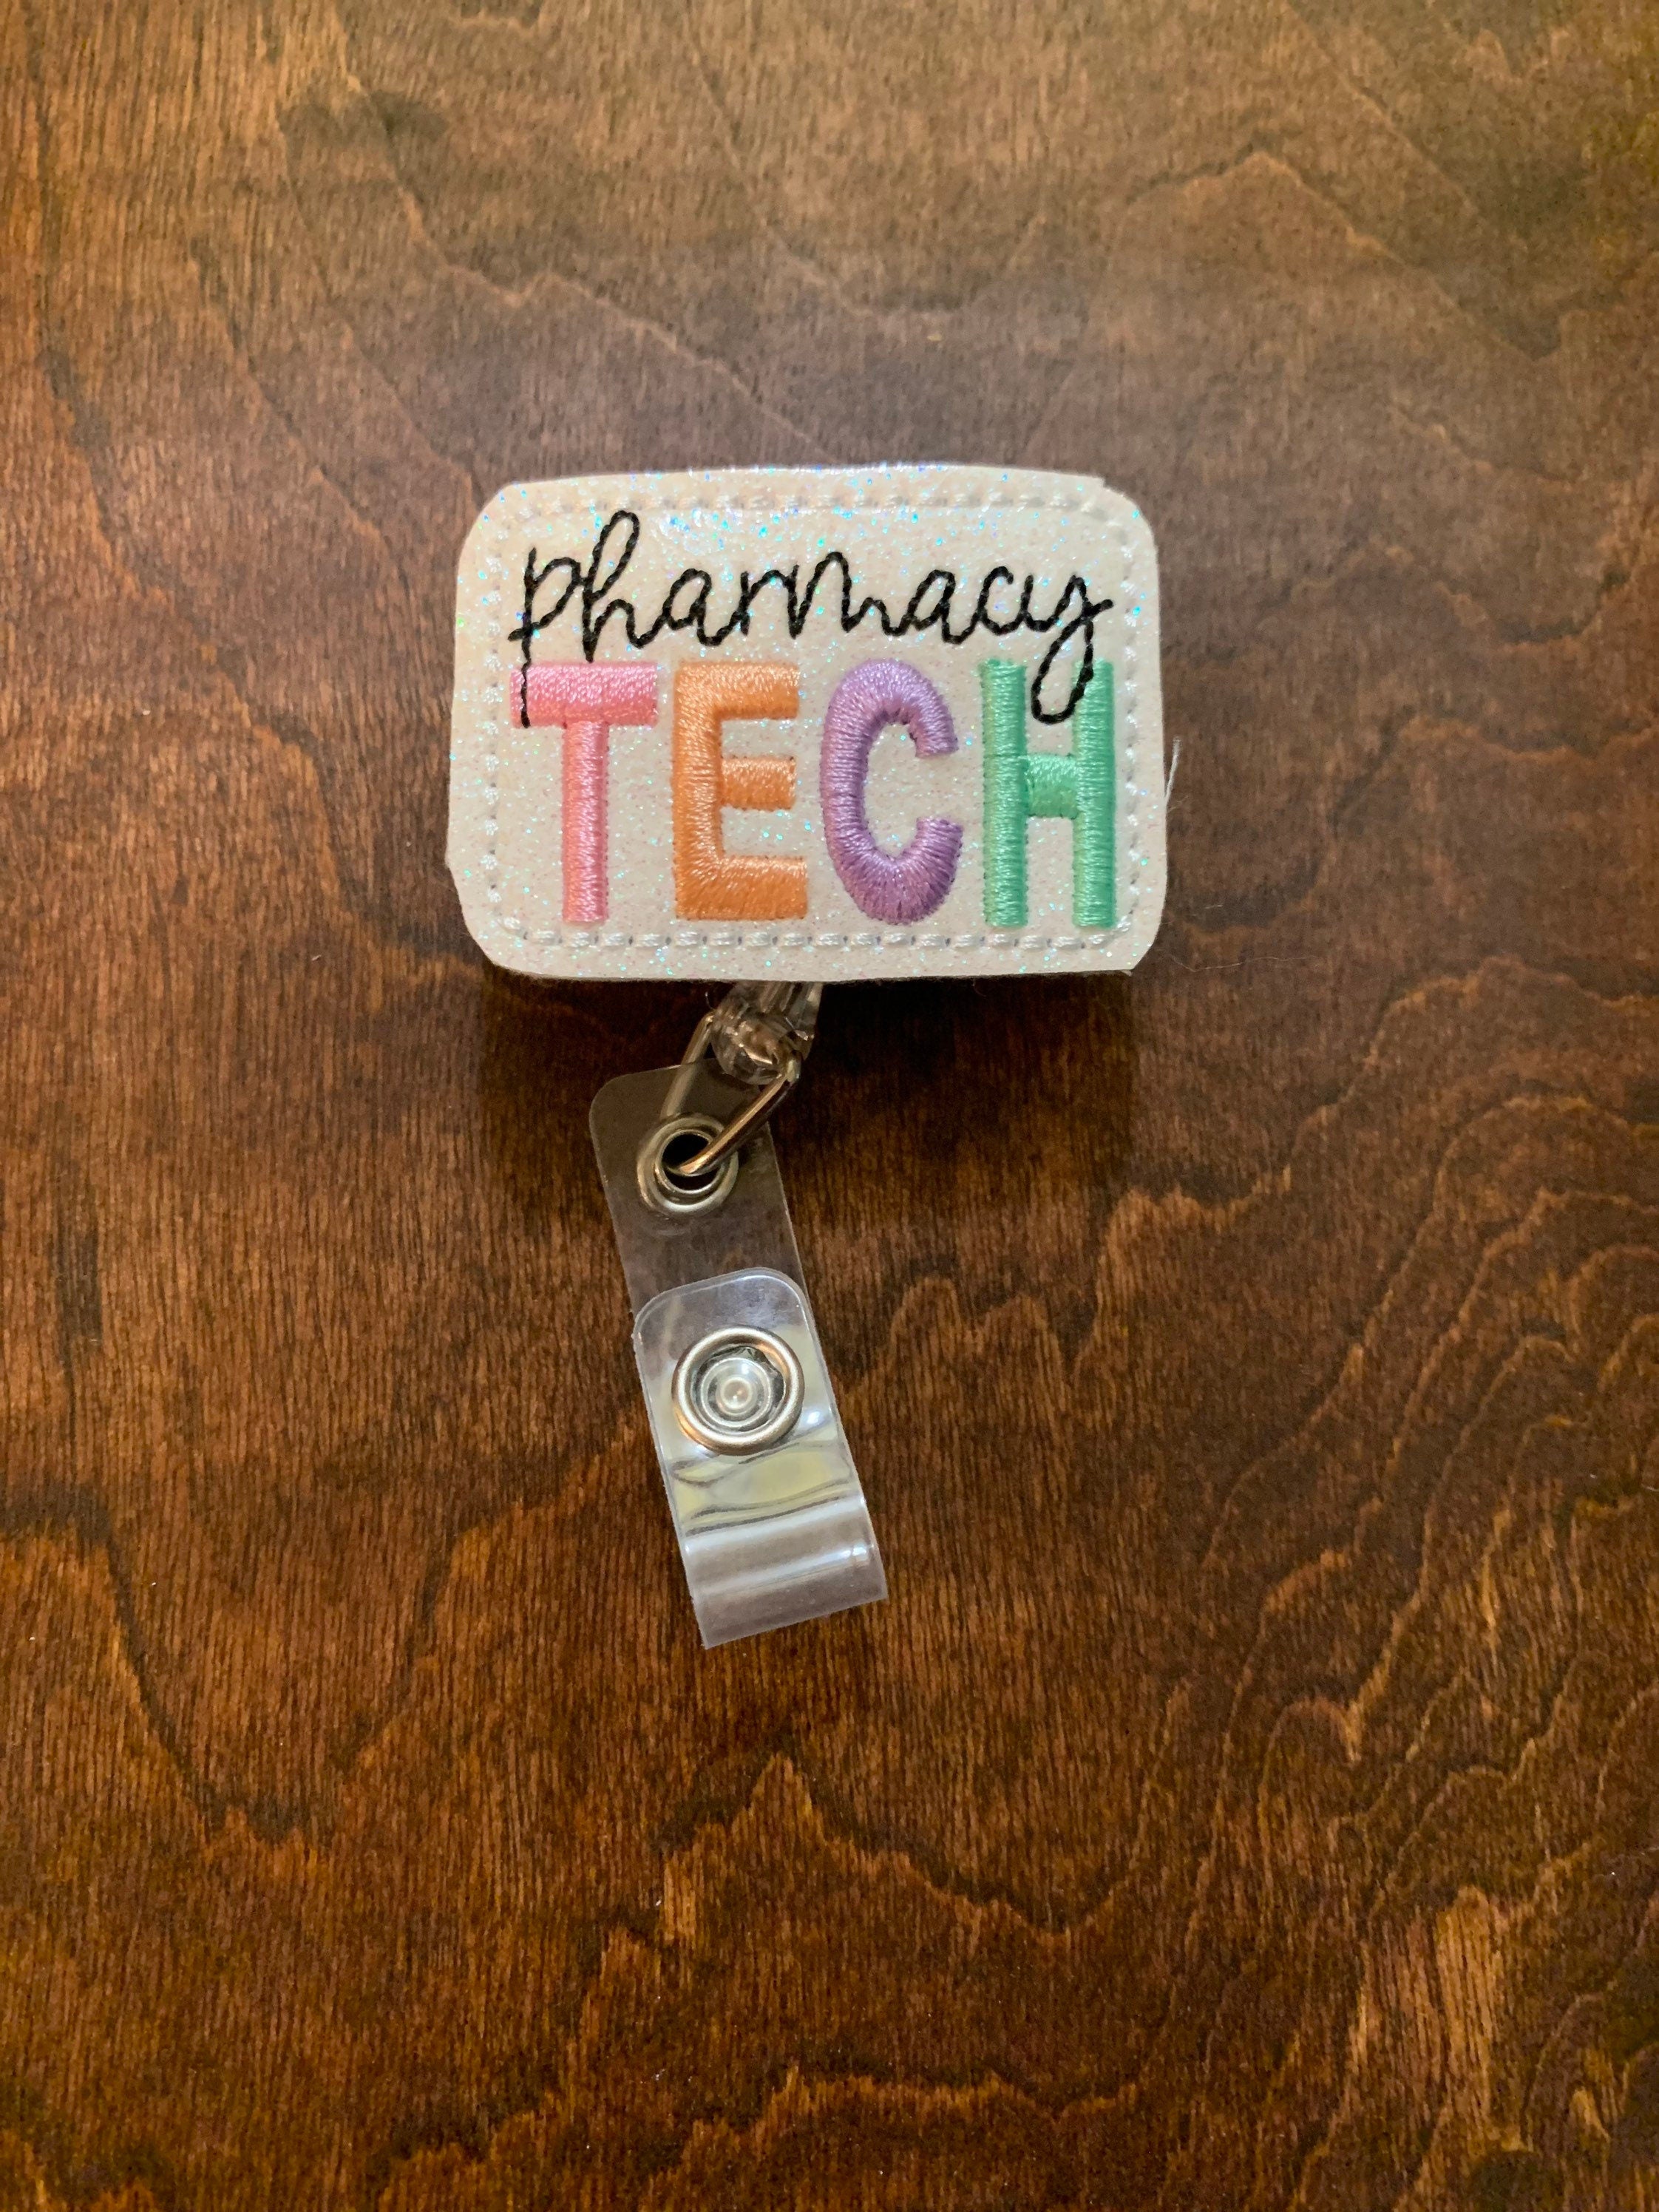 Pharmacy Tech badge reel – 13 Dragonfly Designs